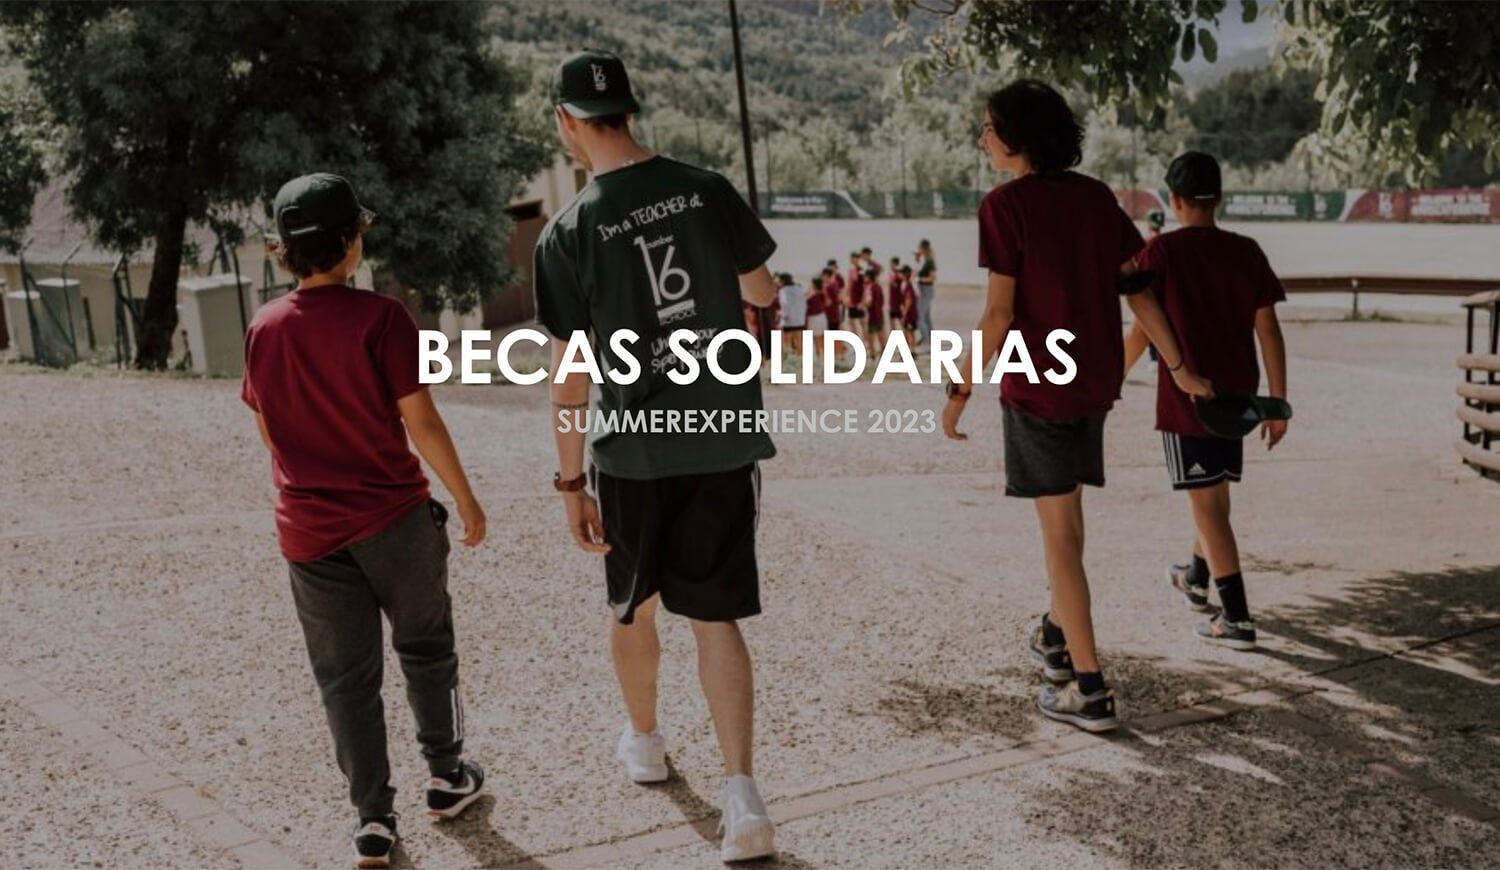 Becas solidarias Number 16 School